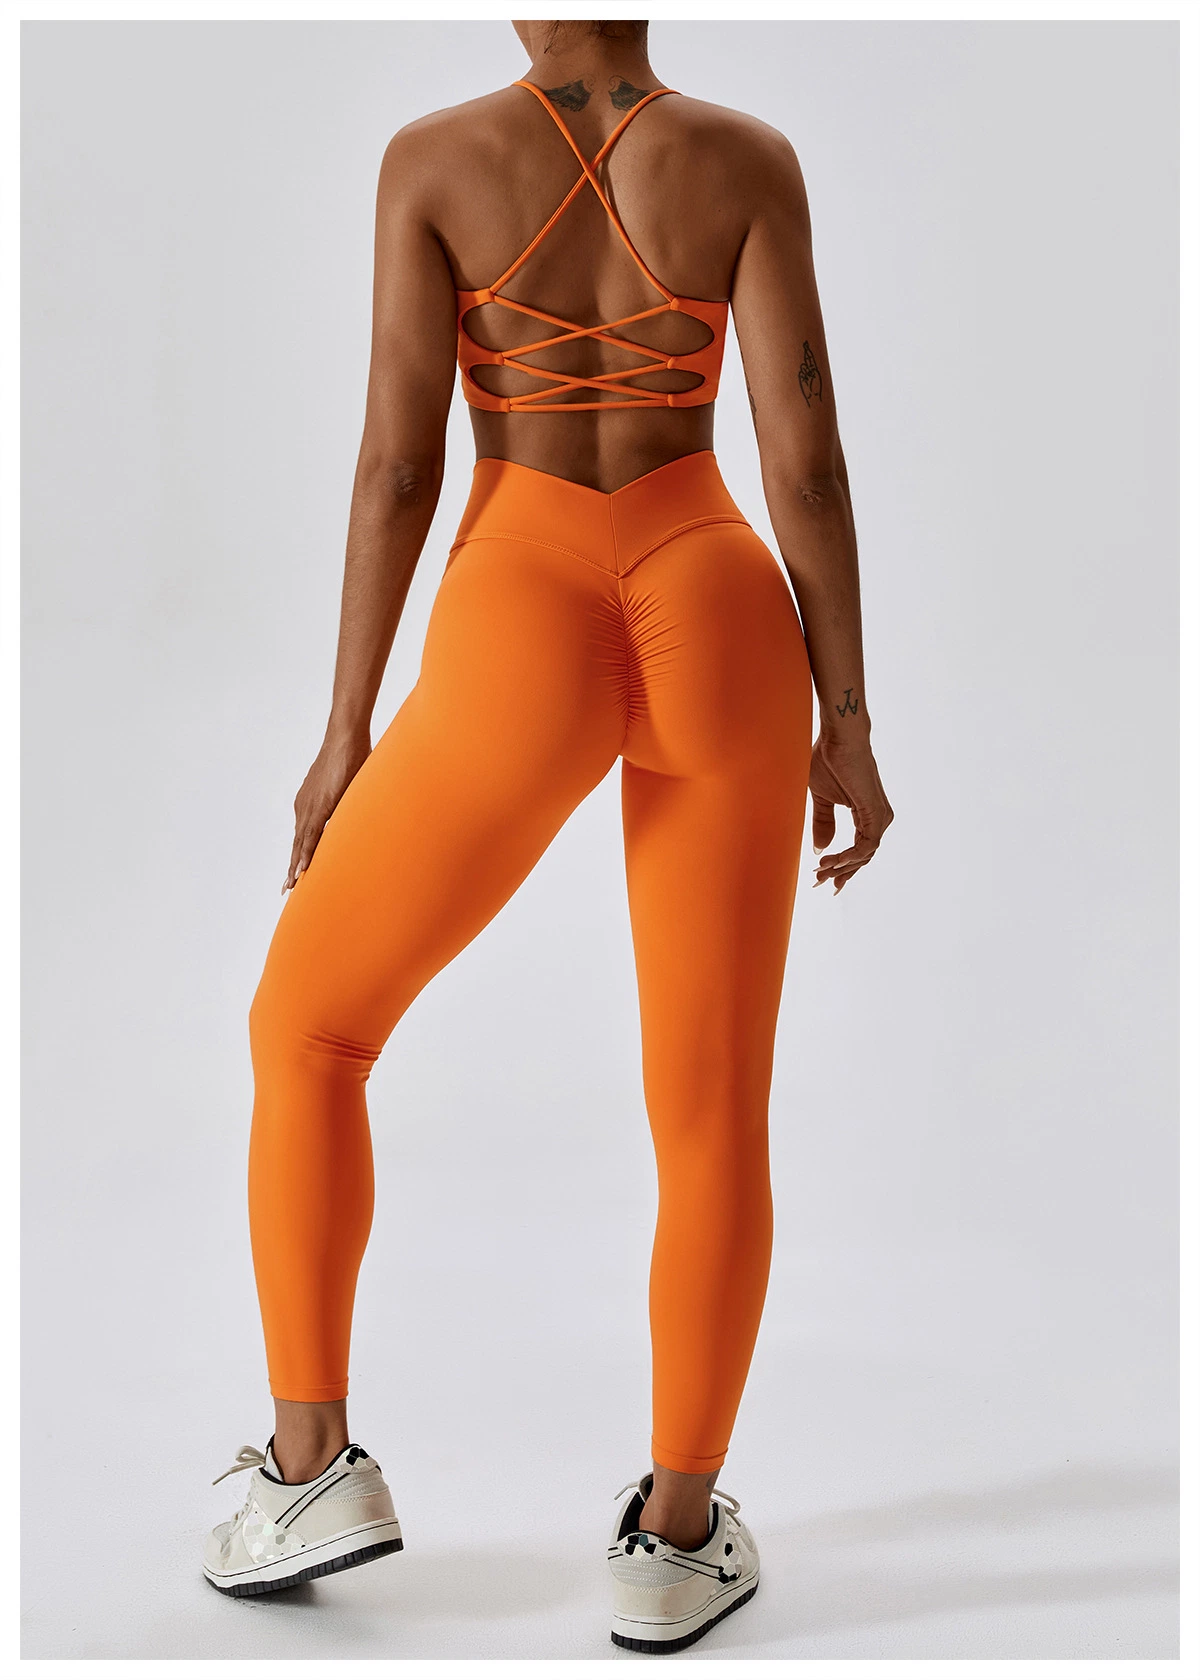 Yoga Set Women Gym Set Sport Suit Workout Clothes Sports Bra High Waist V-Cut Leggings Suit for Fitness Gym Clothing